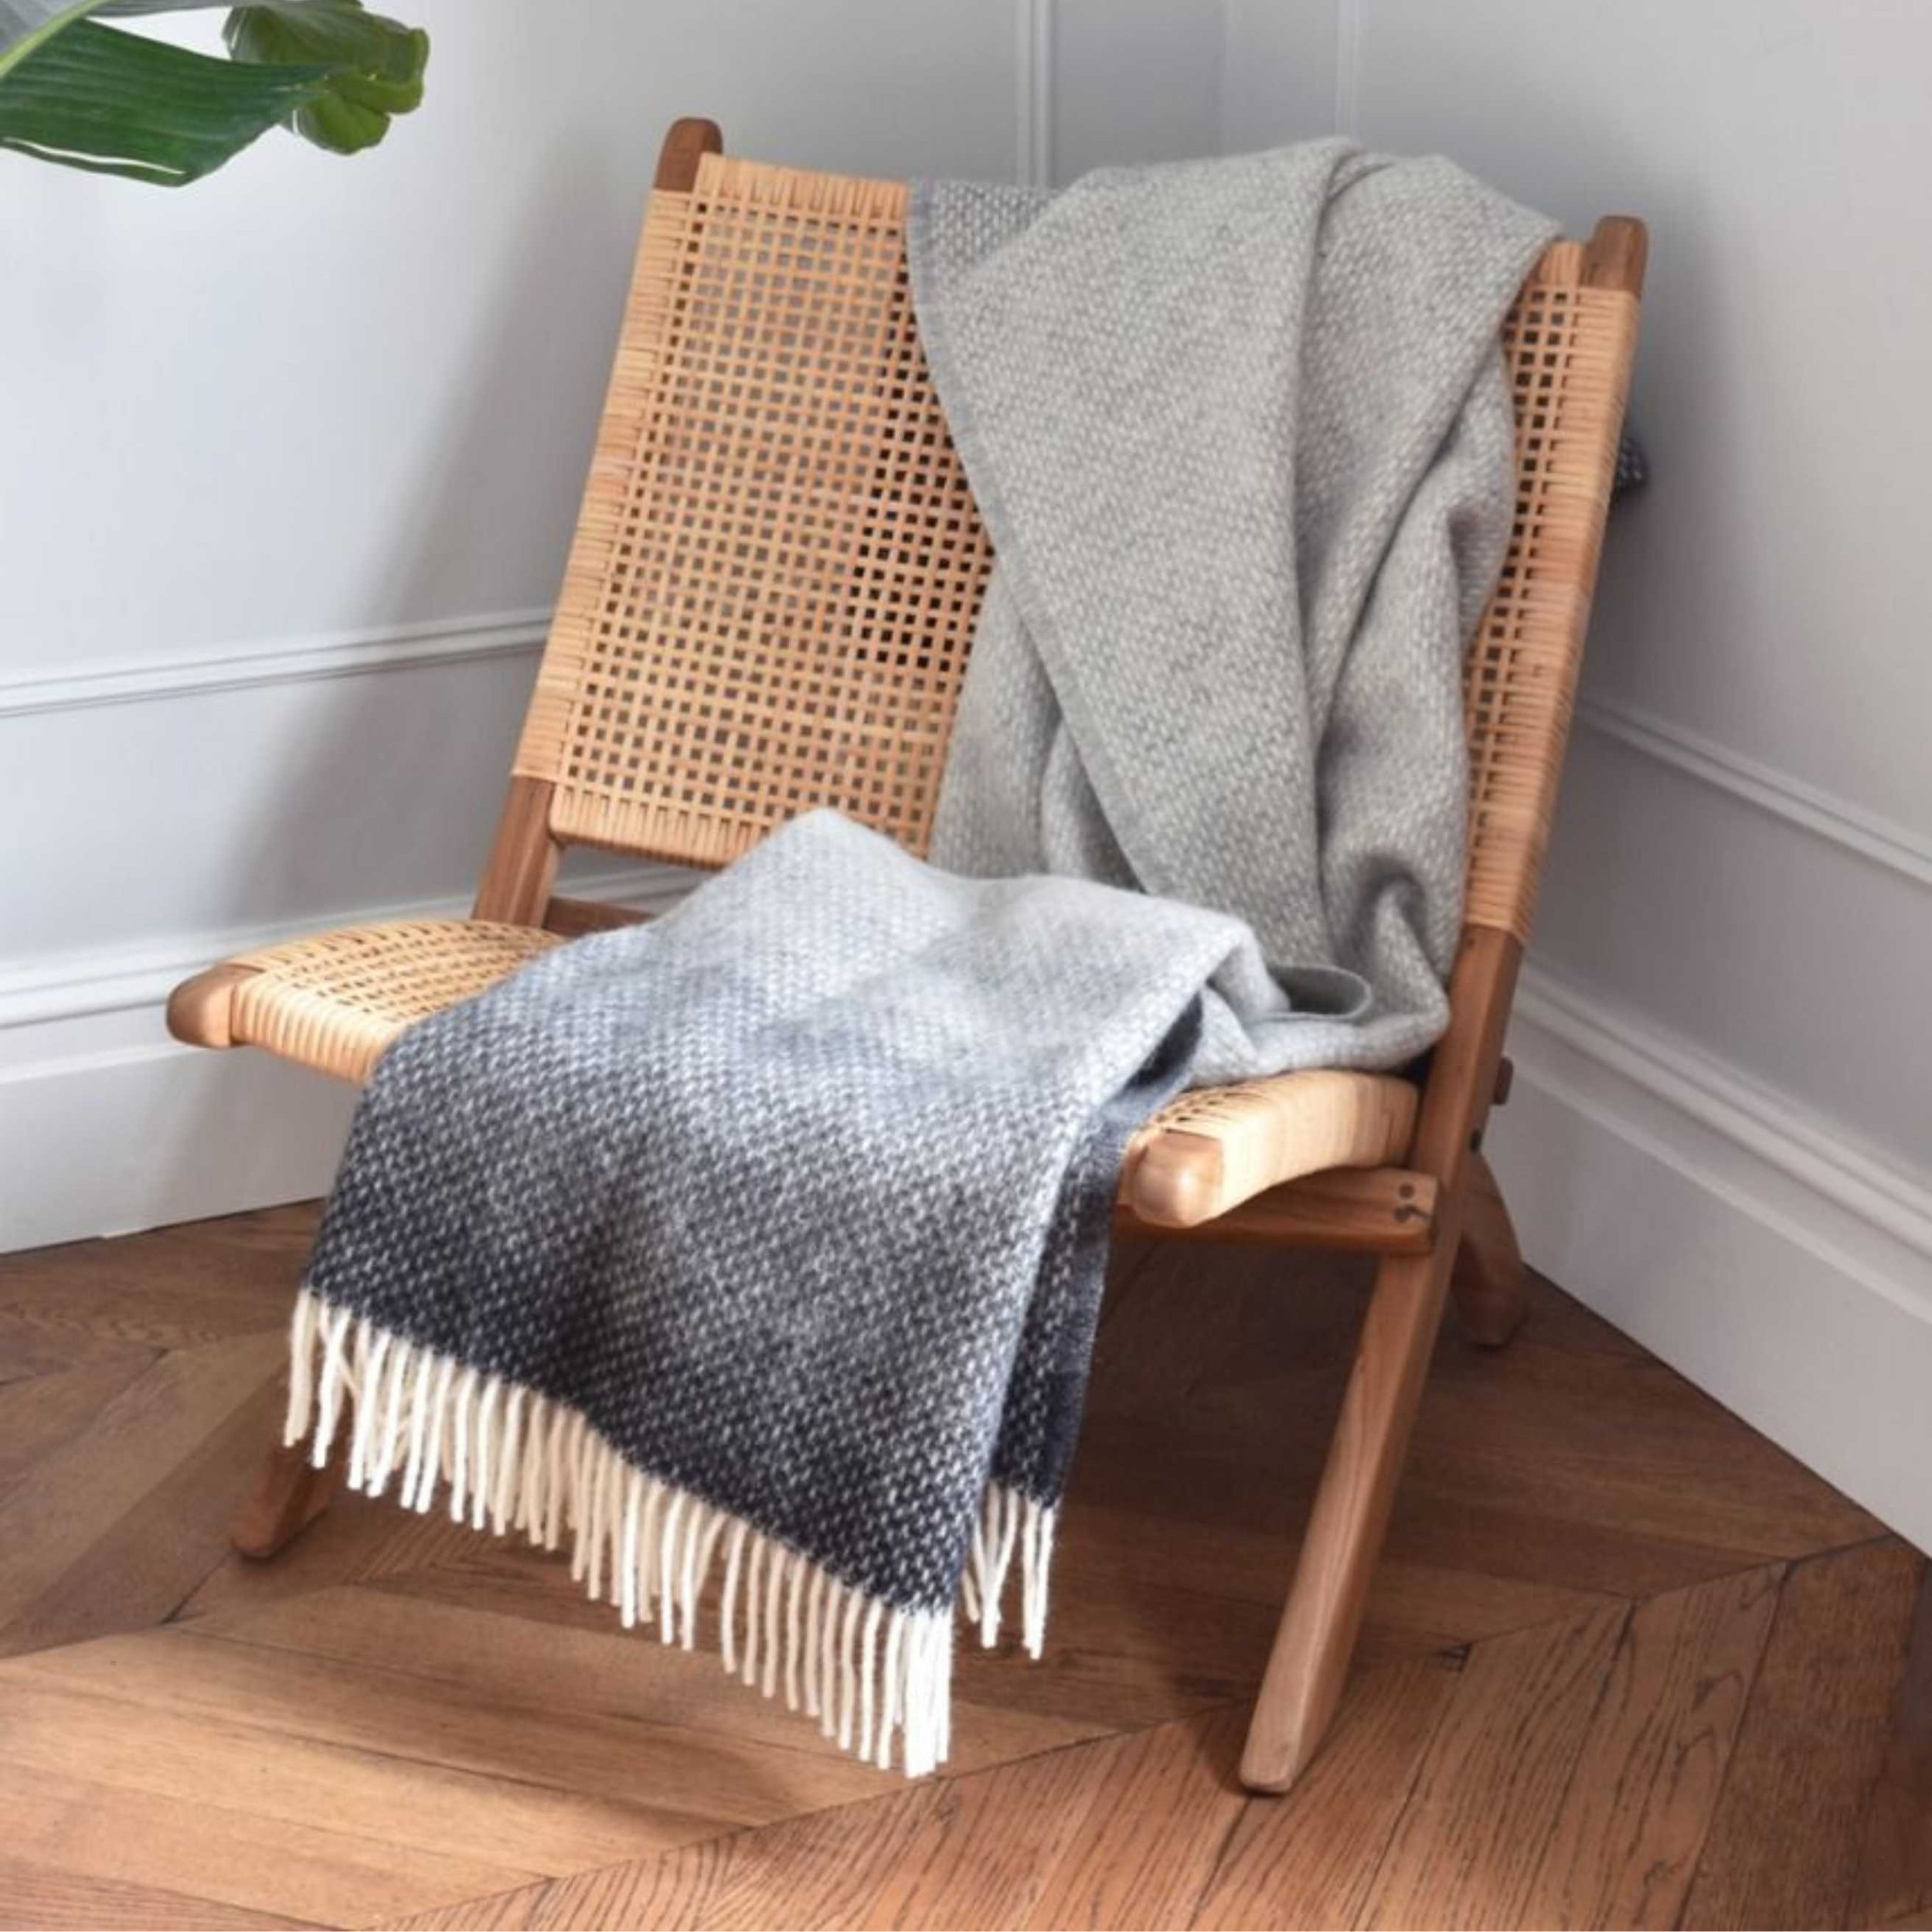 Whicker Chair with Grey Herringbone Blanket.jpg